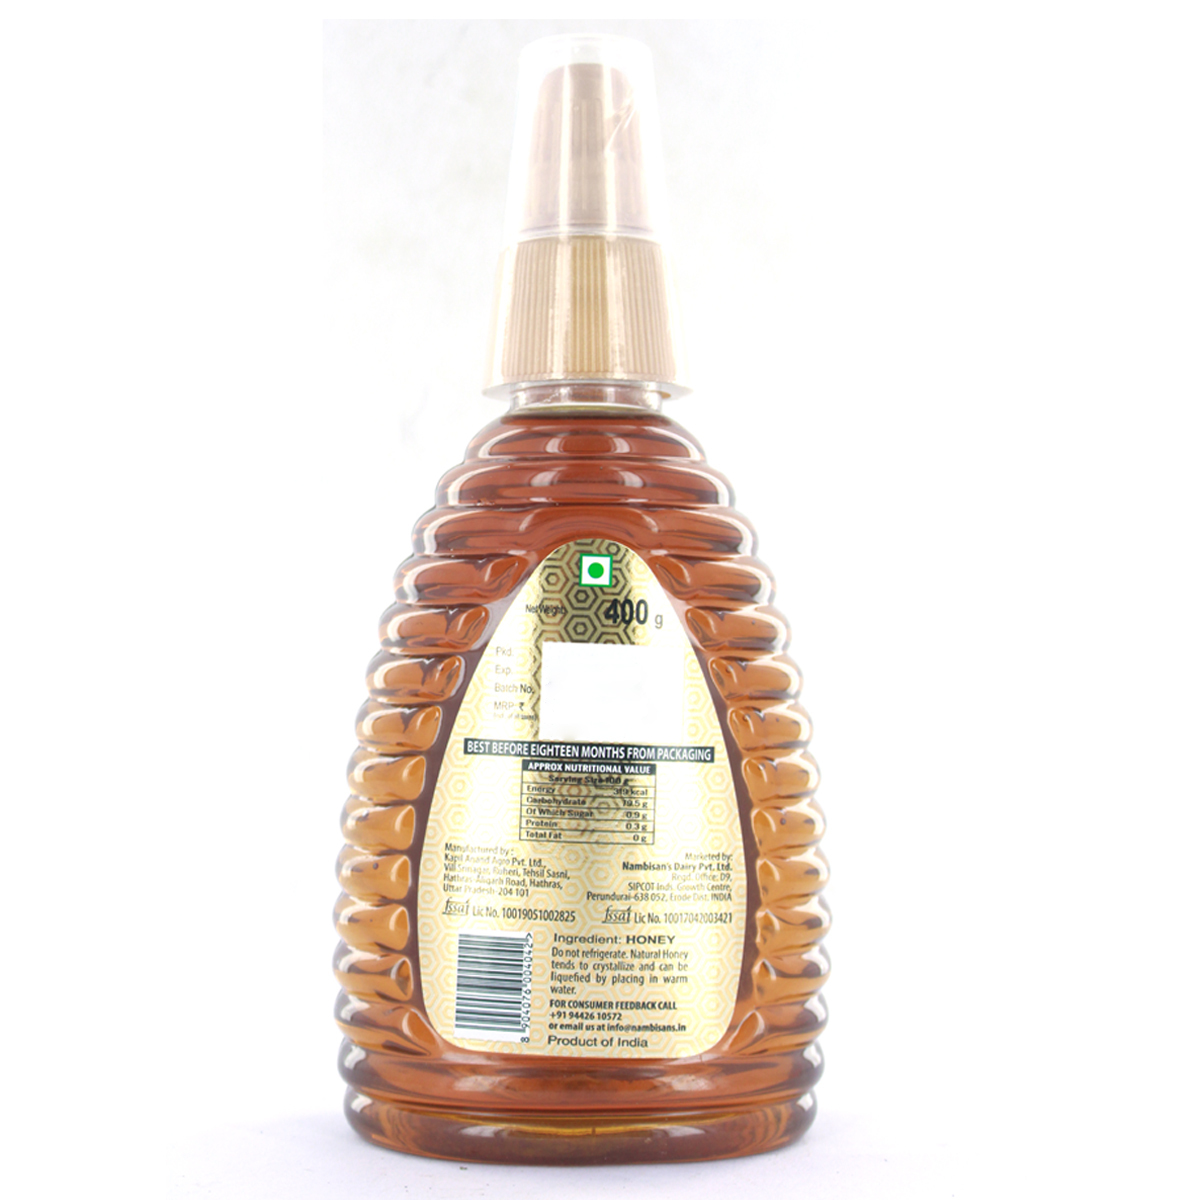 Nambisan's Honey Squeezy 400g